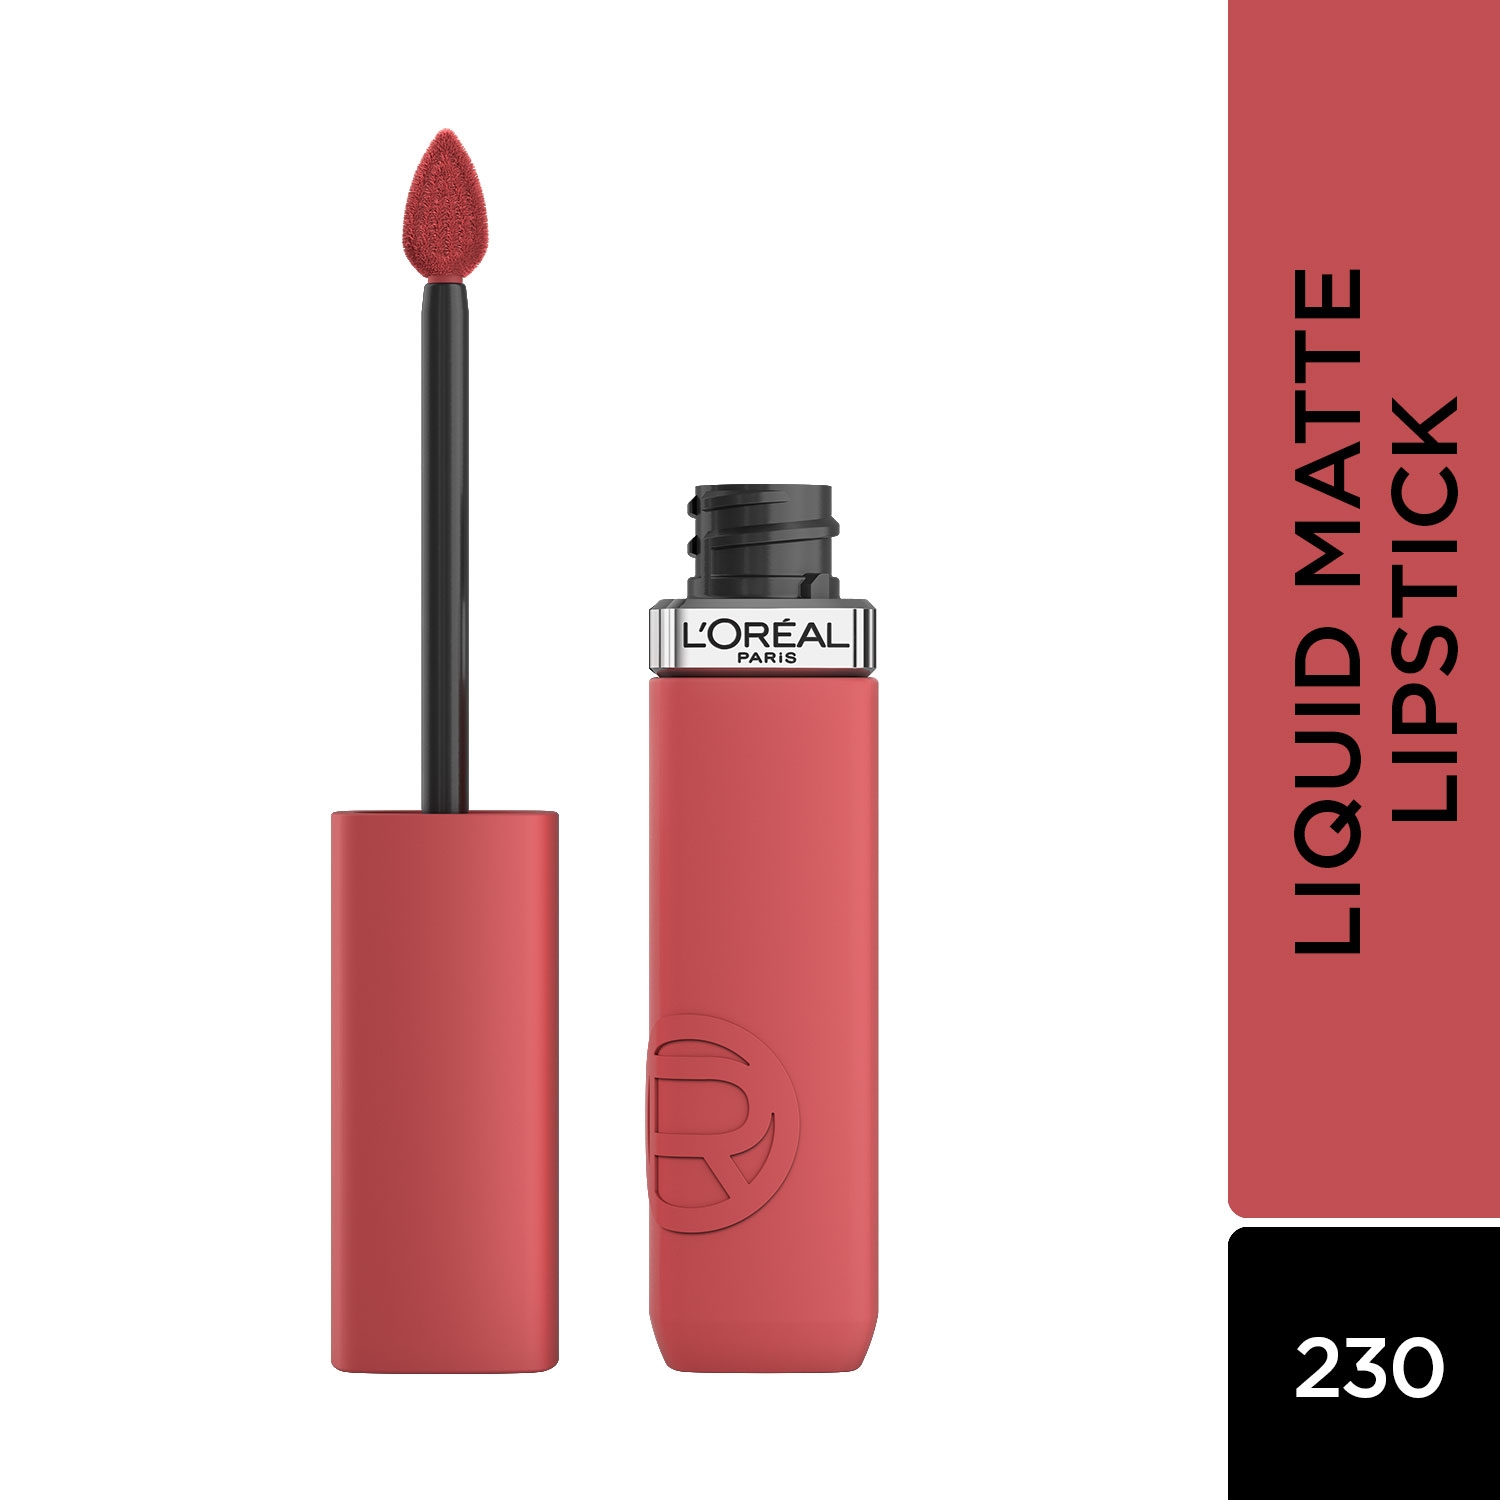 L'Oreal Paris | L'Oreal Paris Infallible Matte Resistance Liquid Lipstick - 230 Shopping Spree (5ml)